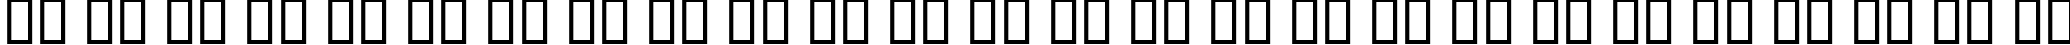 Пример написания английского алфавита шрифтом B Bardiya